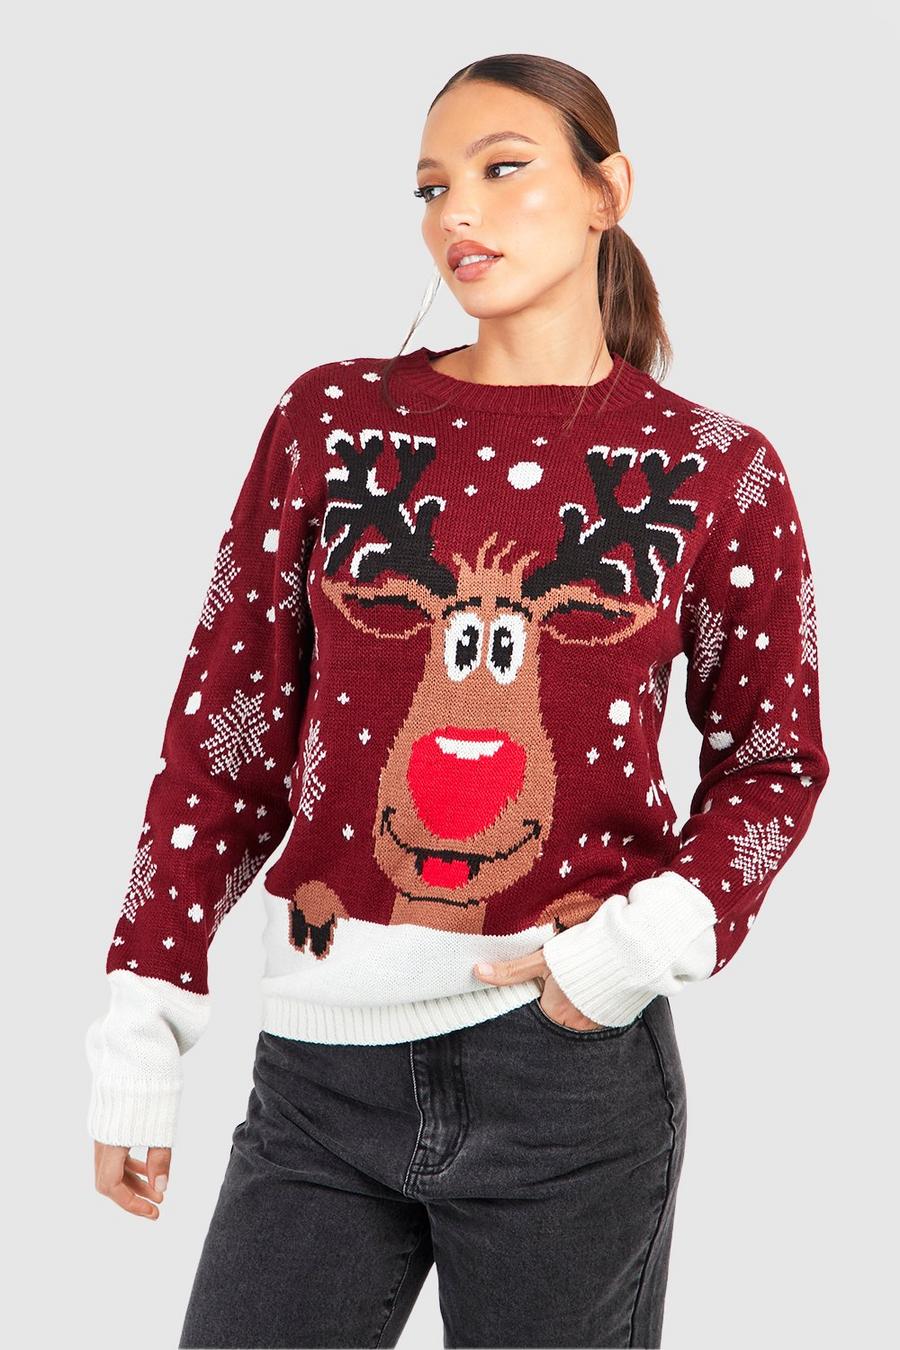 Wine Tall Reindeer Christmas Sweater